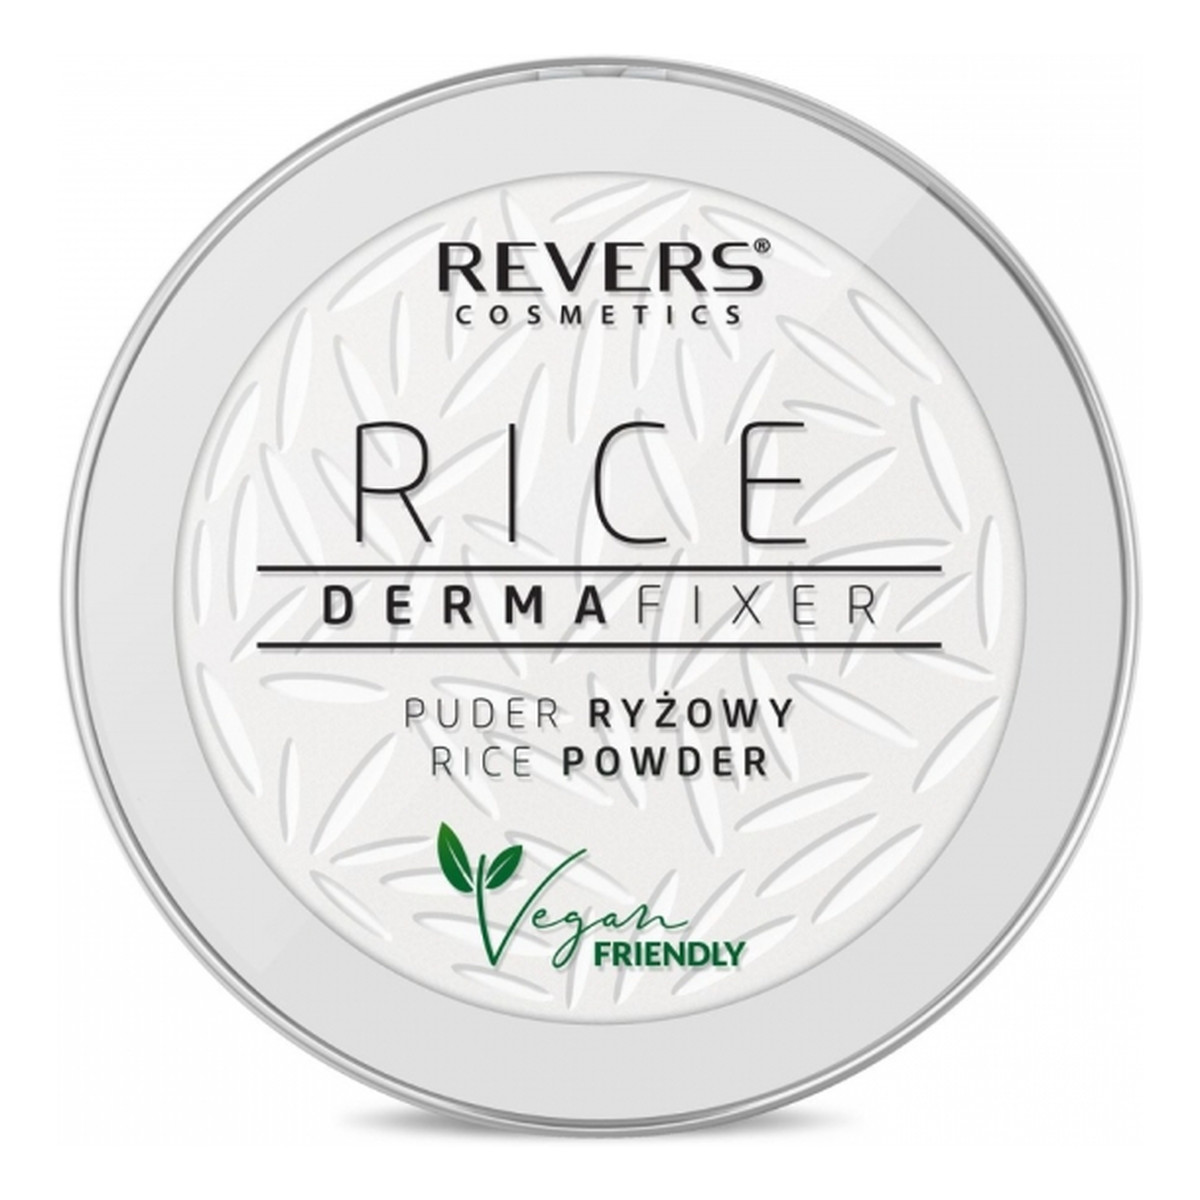 Revers Rice Derma Fixer Puder Ryżowy prasowany 10g